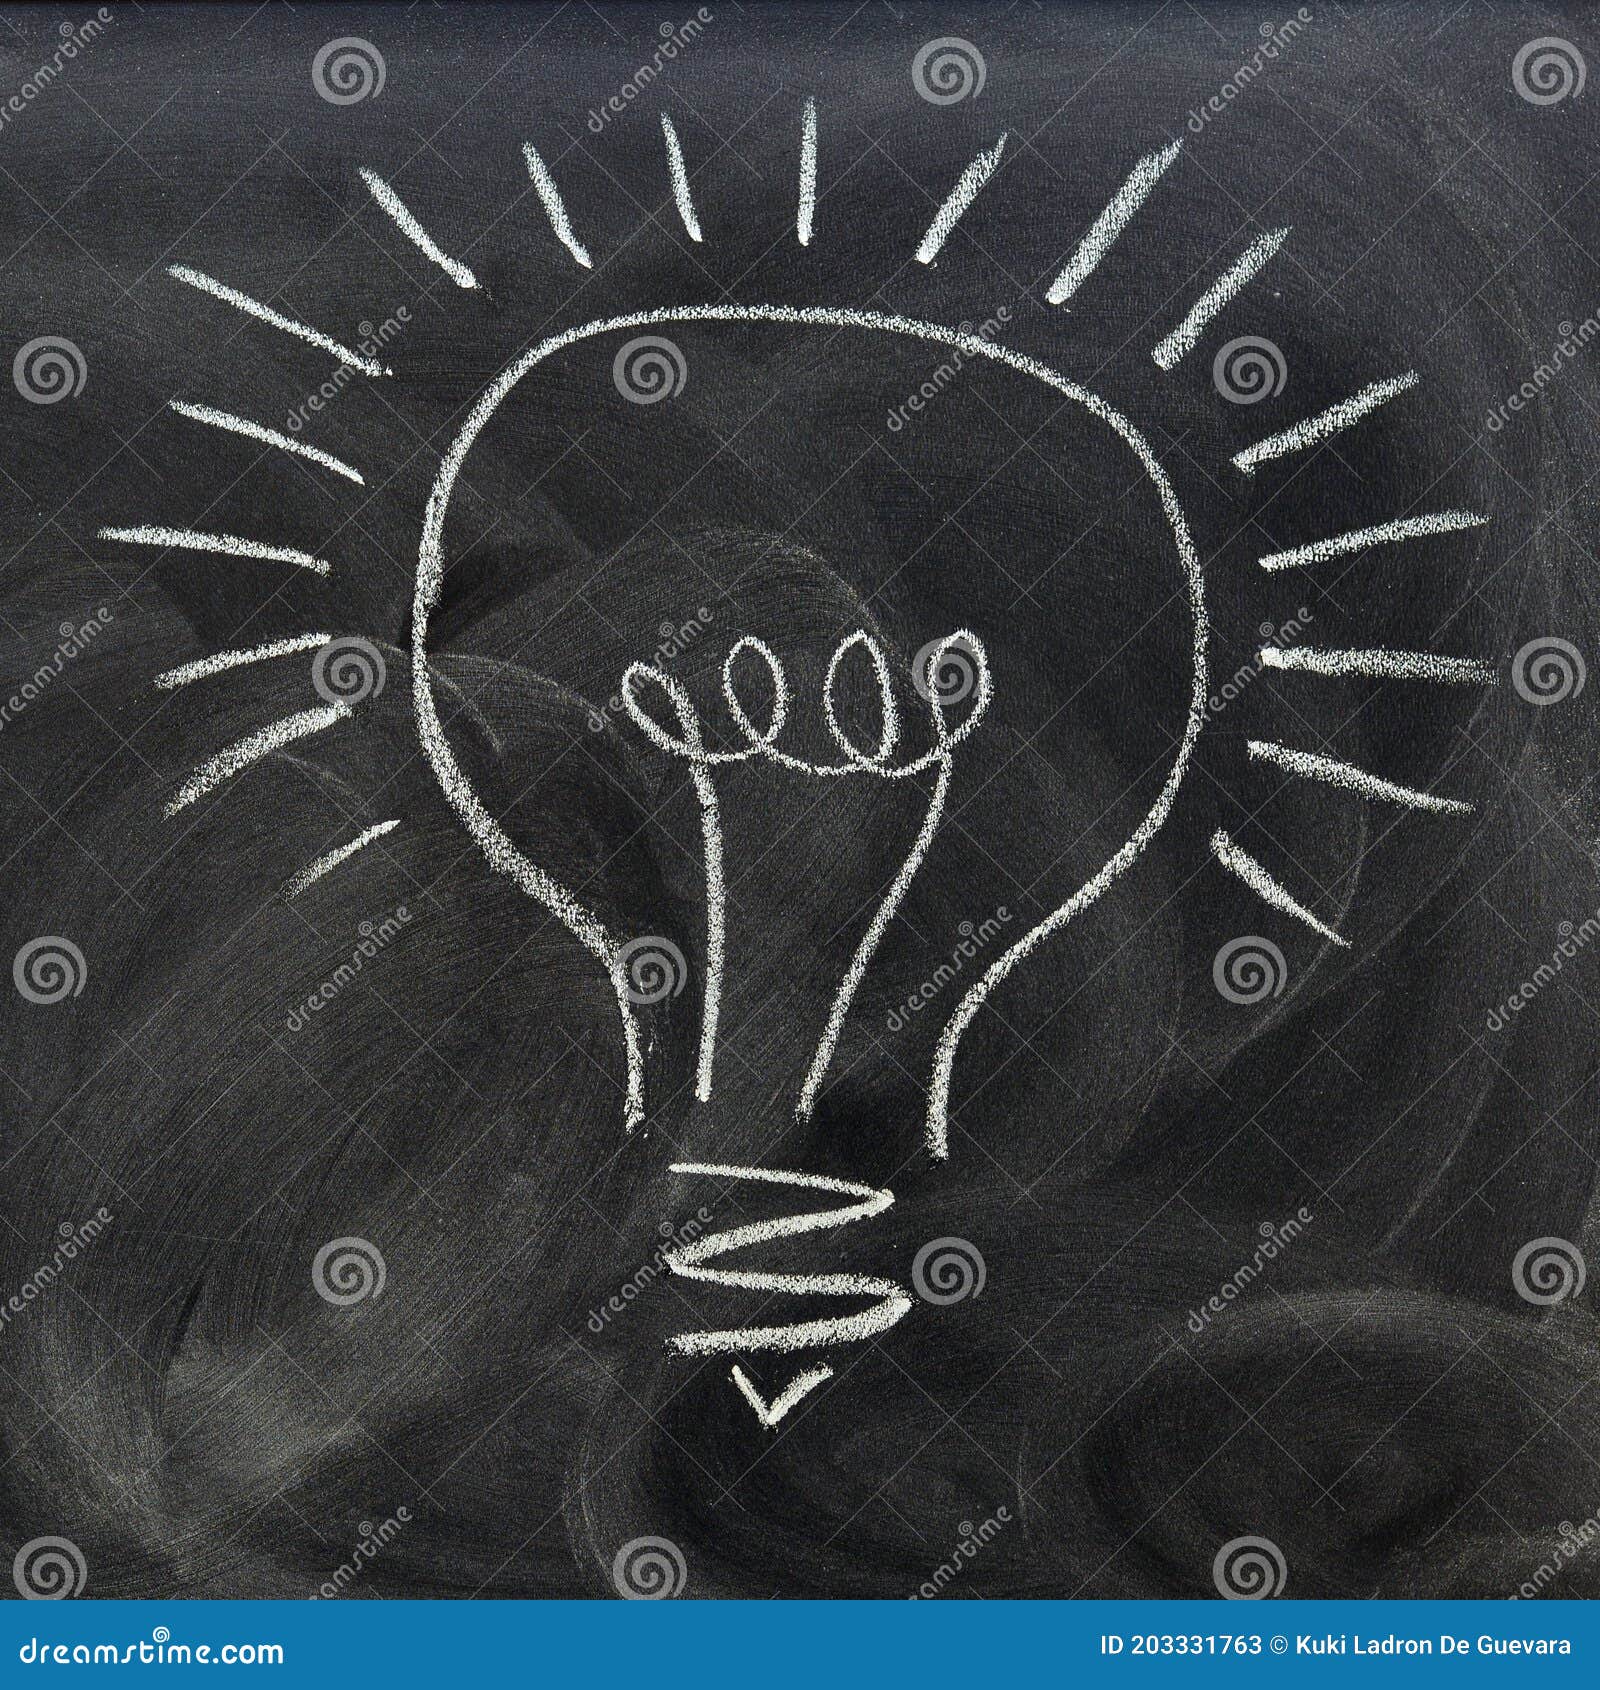 a light bulb drawn on the blackboard